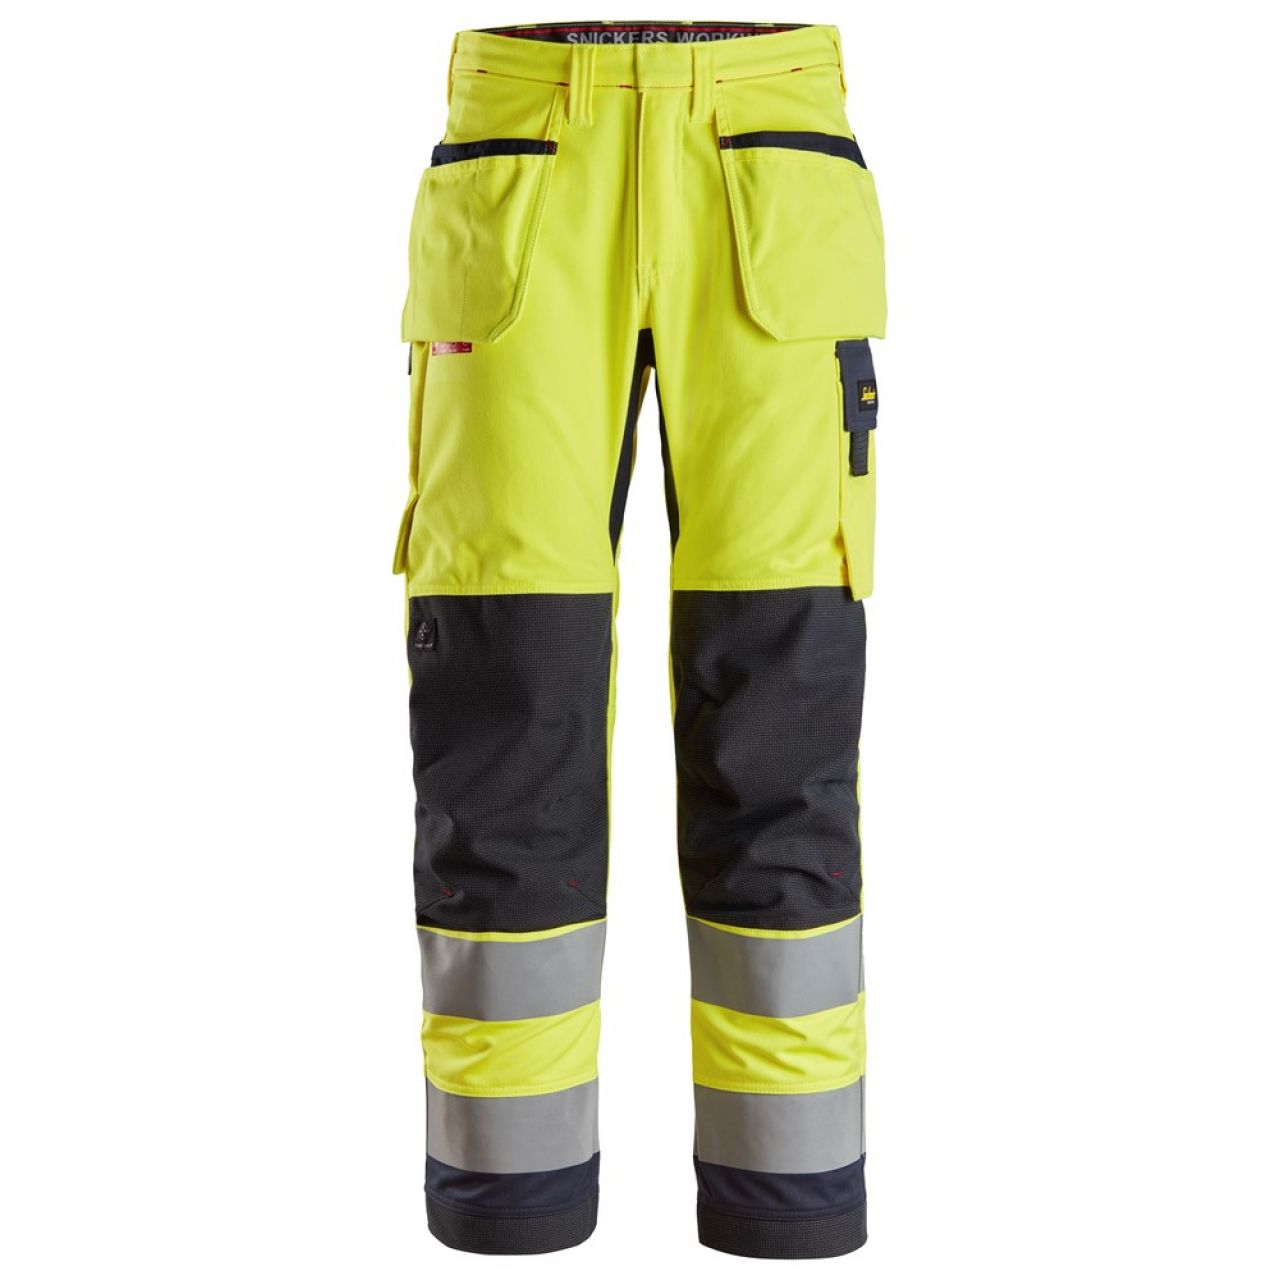 6260 Pantalones largos de trabajo de alta visibilidad clase 2 con bolsillos flotantes ProtecWork amarillo-azul marino talla 156